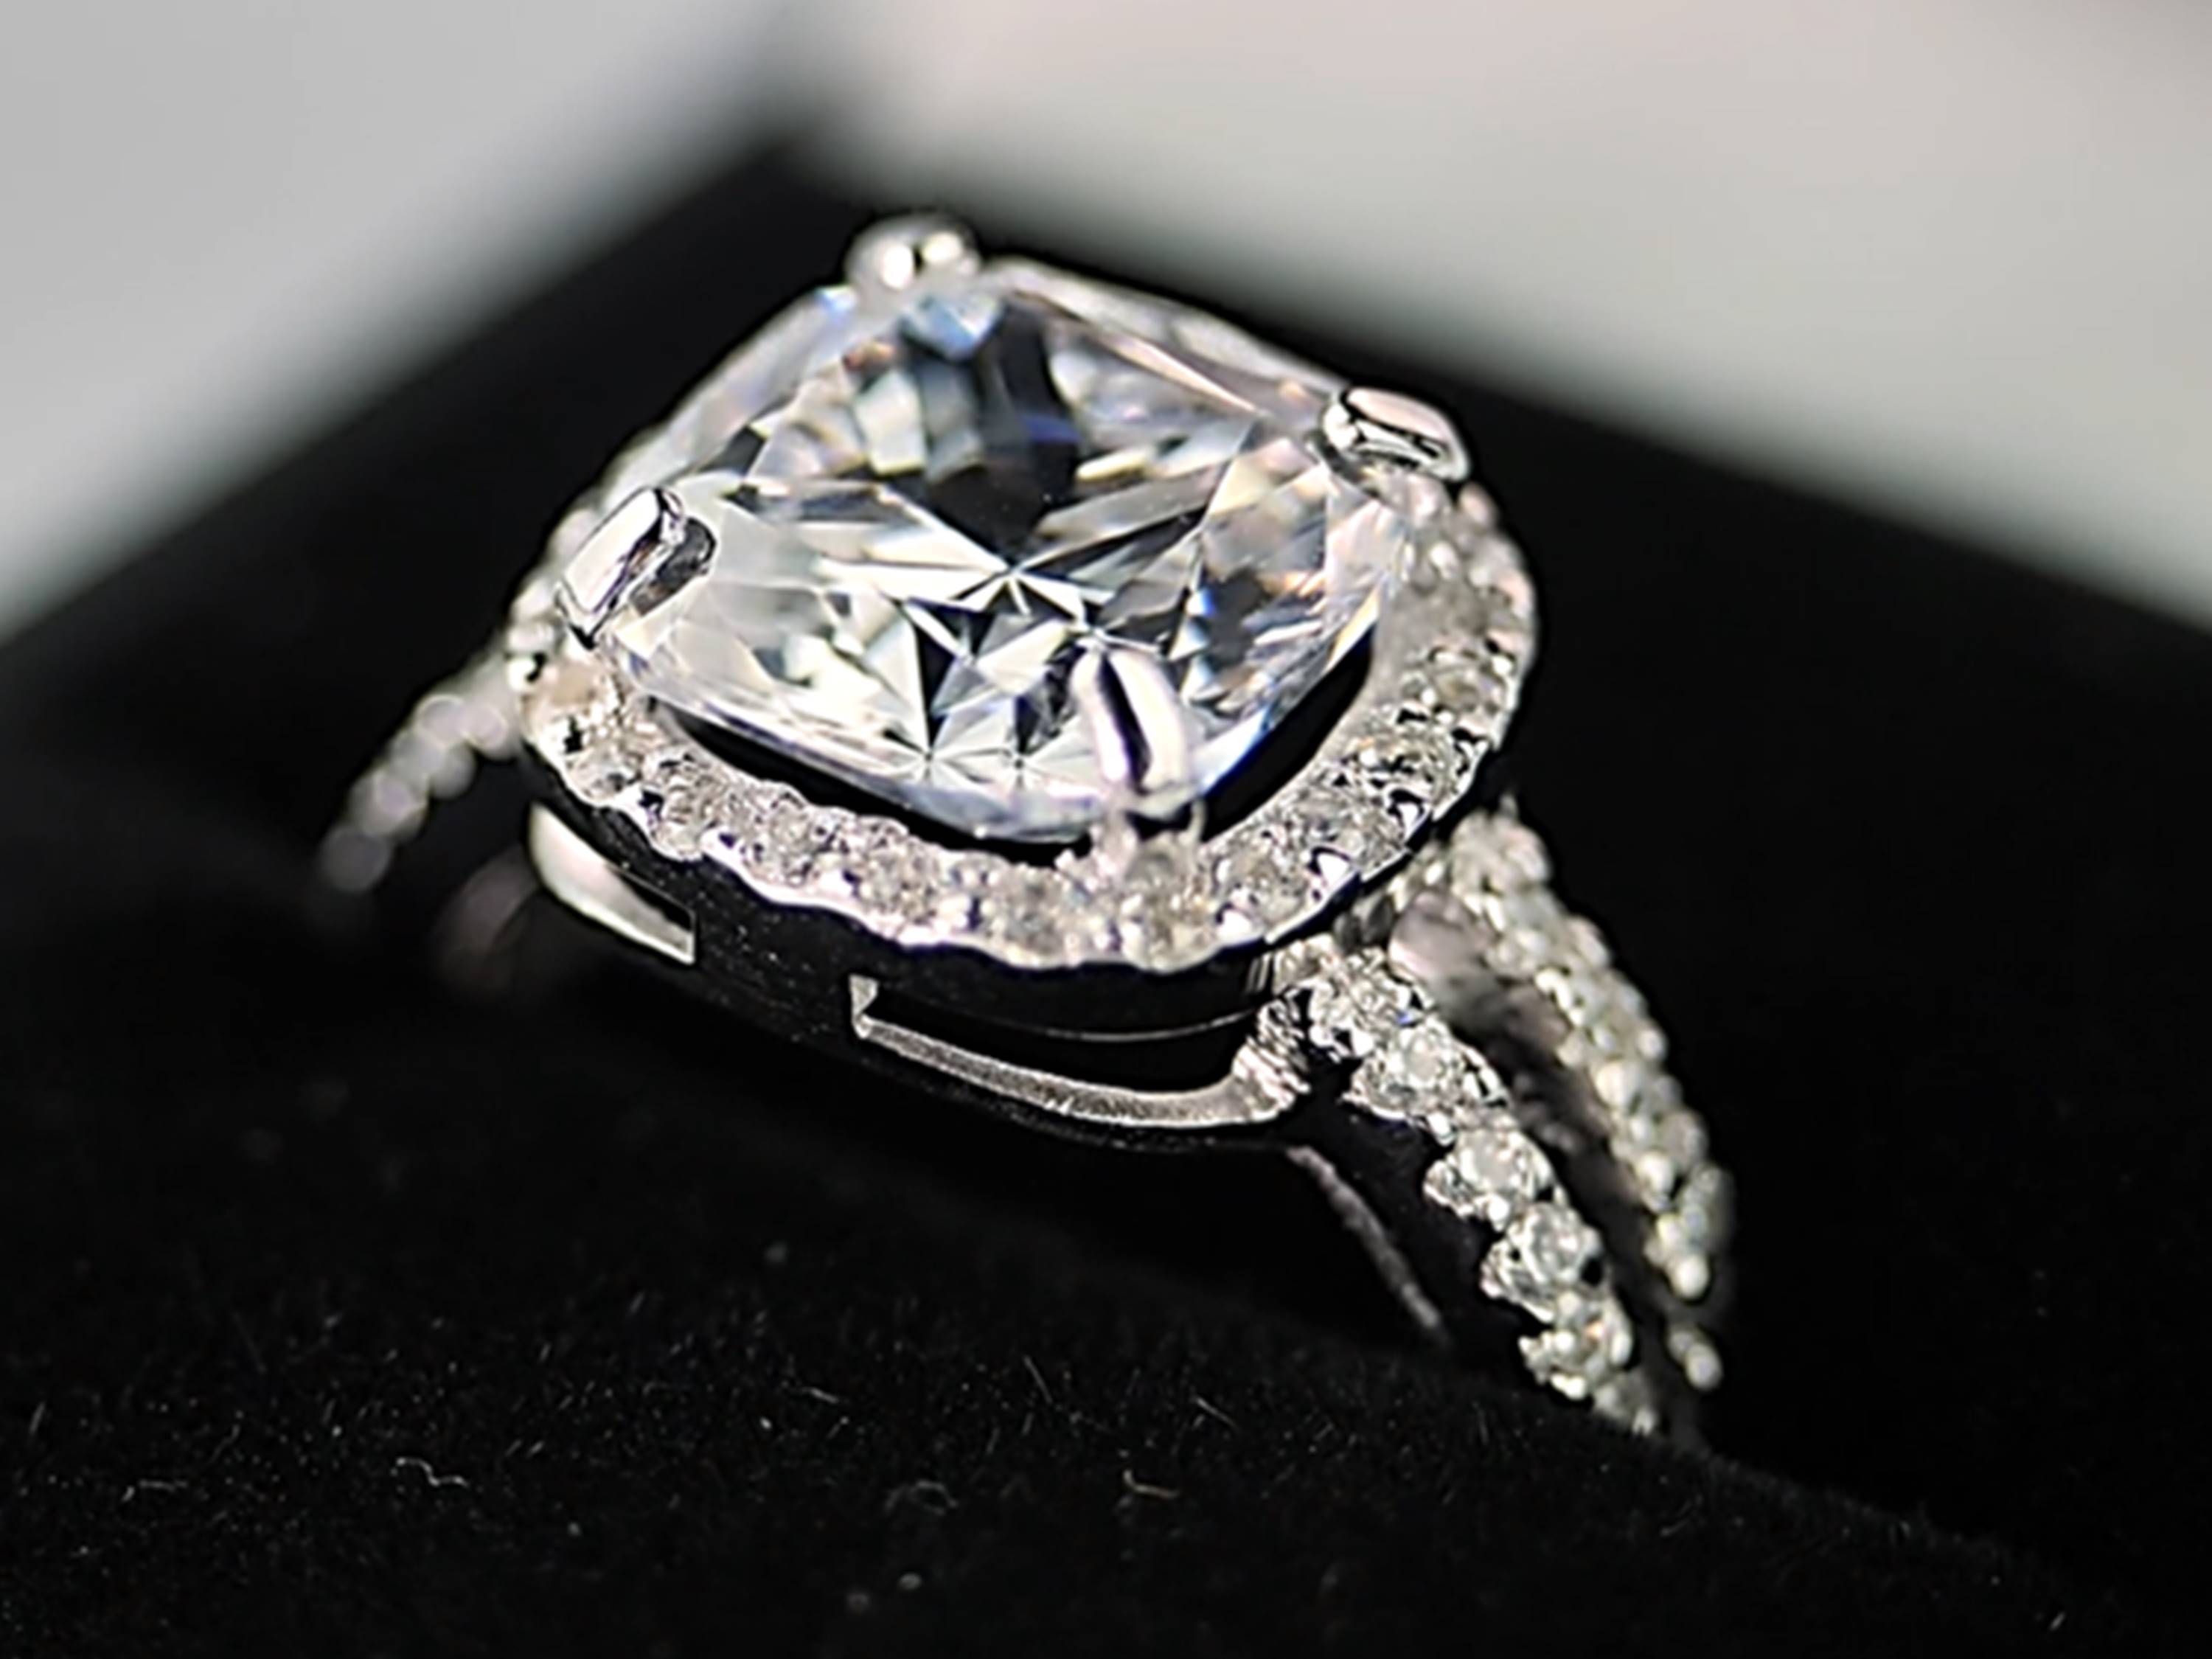 Luxuria Diamonds Diamond simulant engagement rings reliablecounter blog